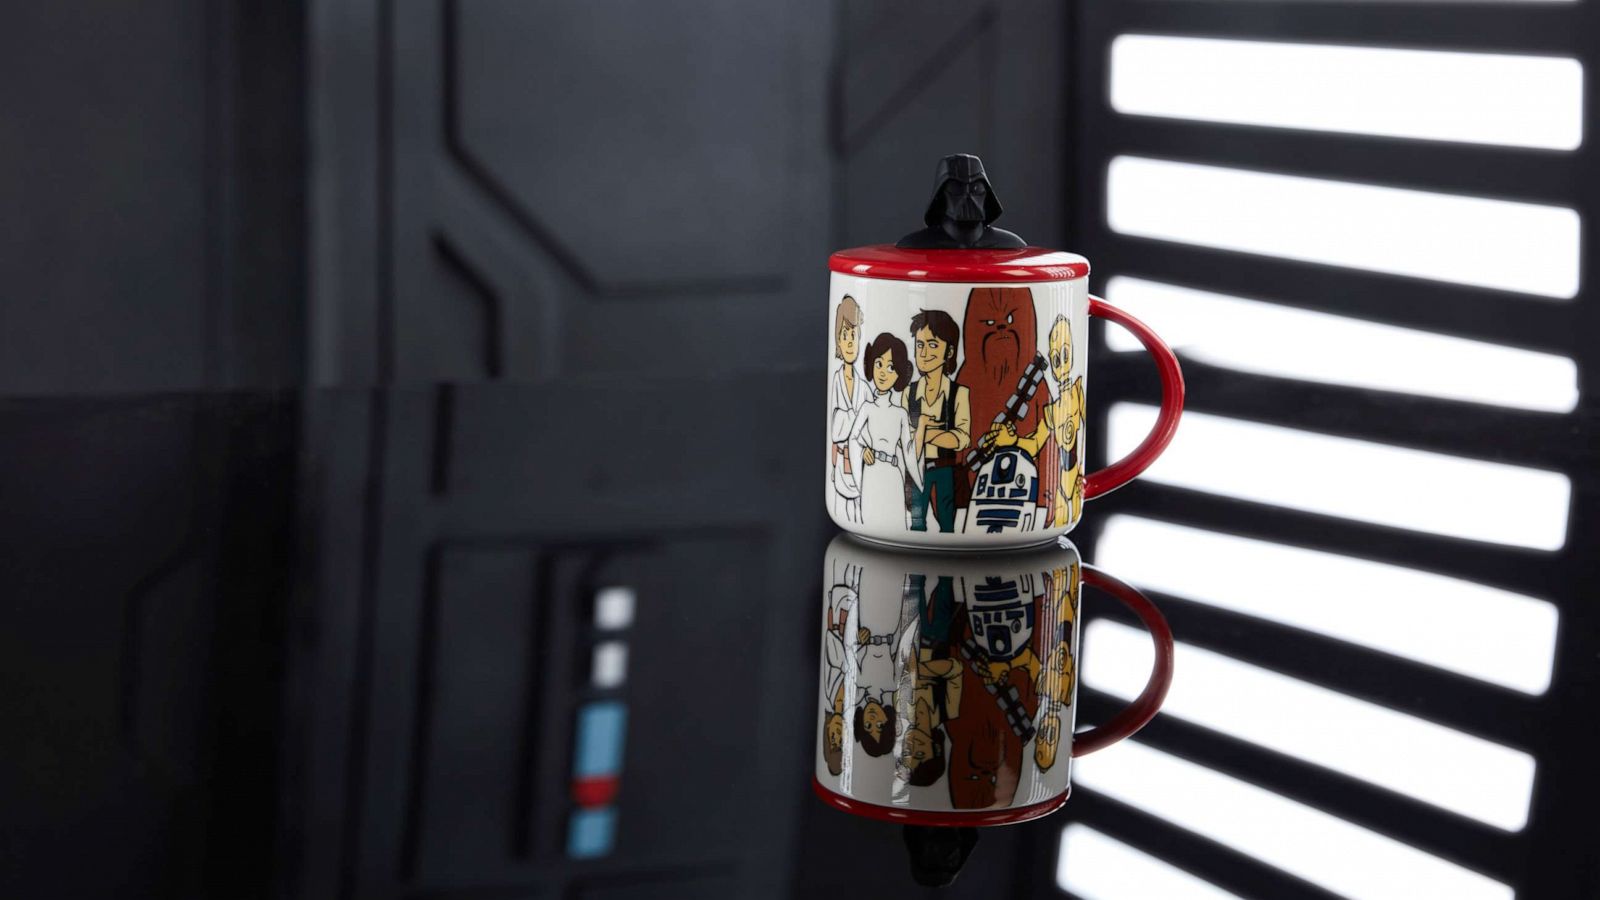 Espresso Cup Set, Star Wars Storm Trooper Espresso Cups , Set of Four,  Porcelain Espresso Cups and Saucers , Gift for Him 